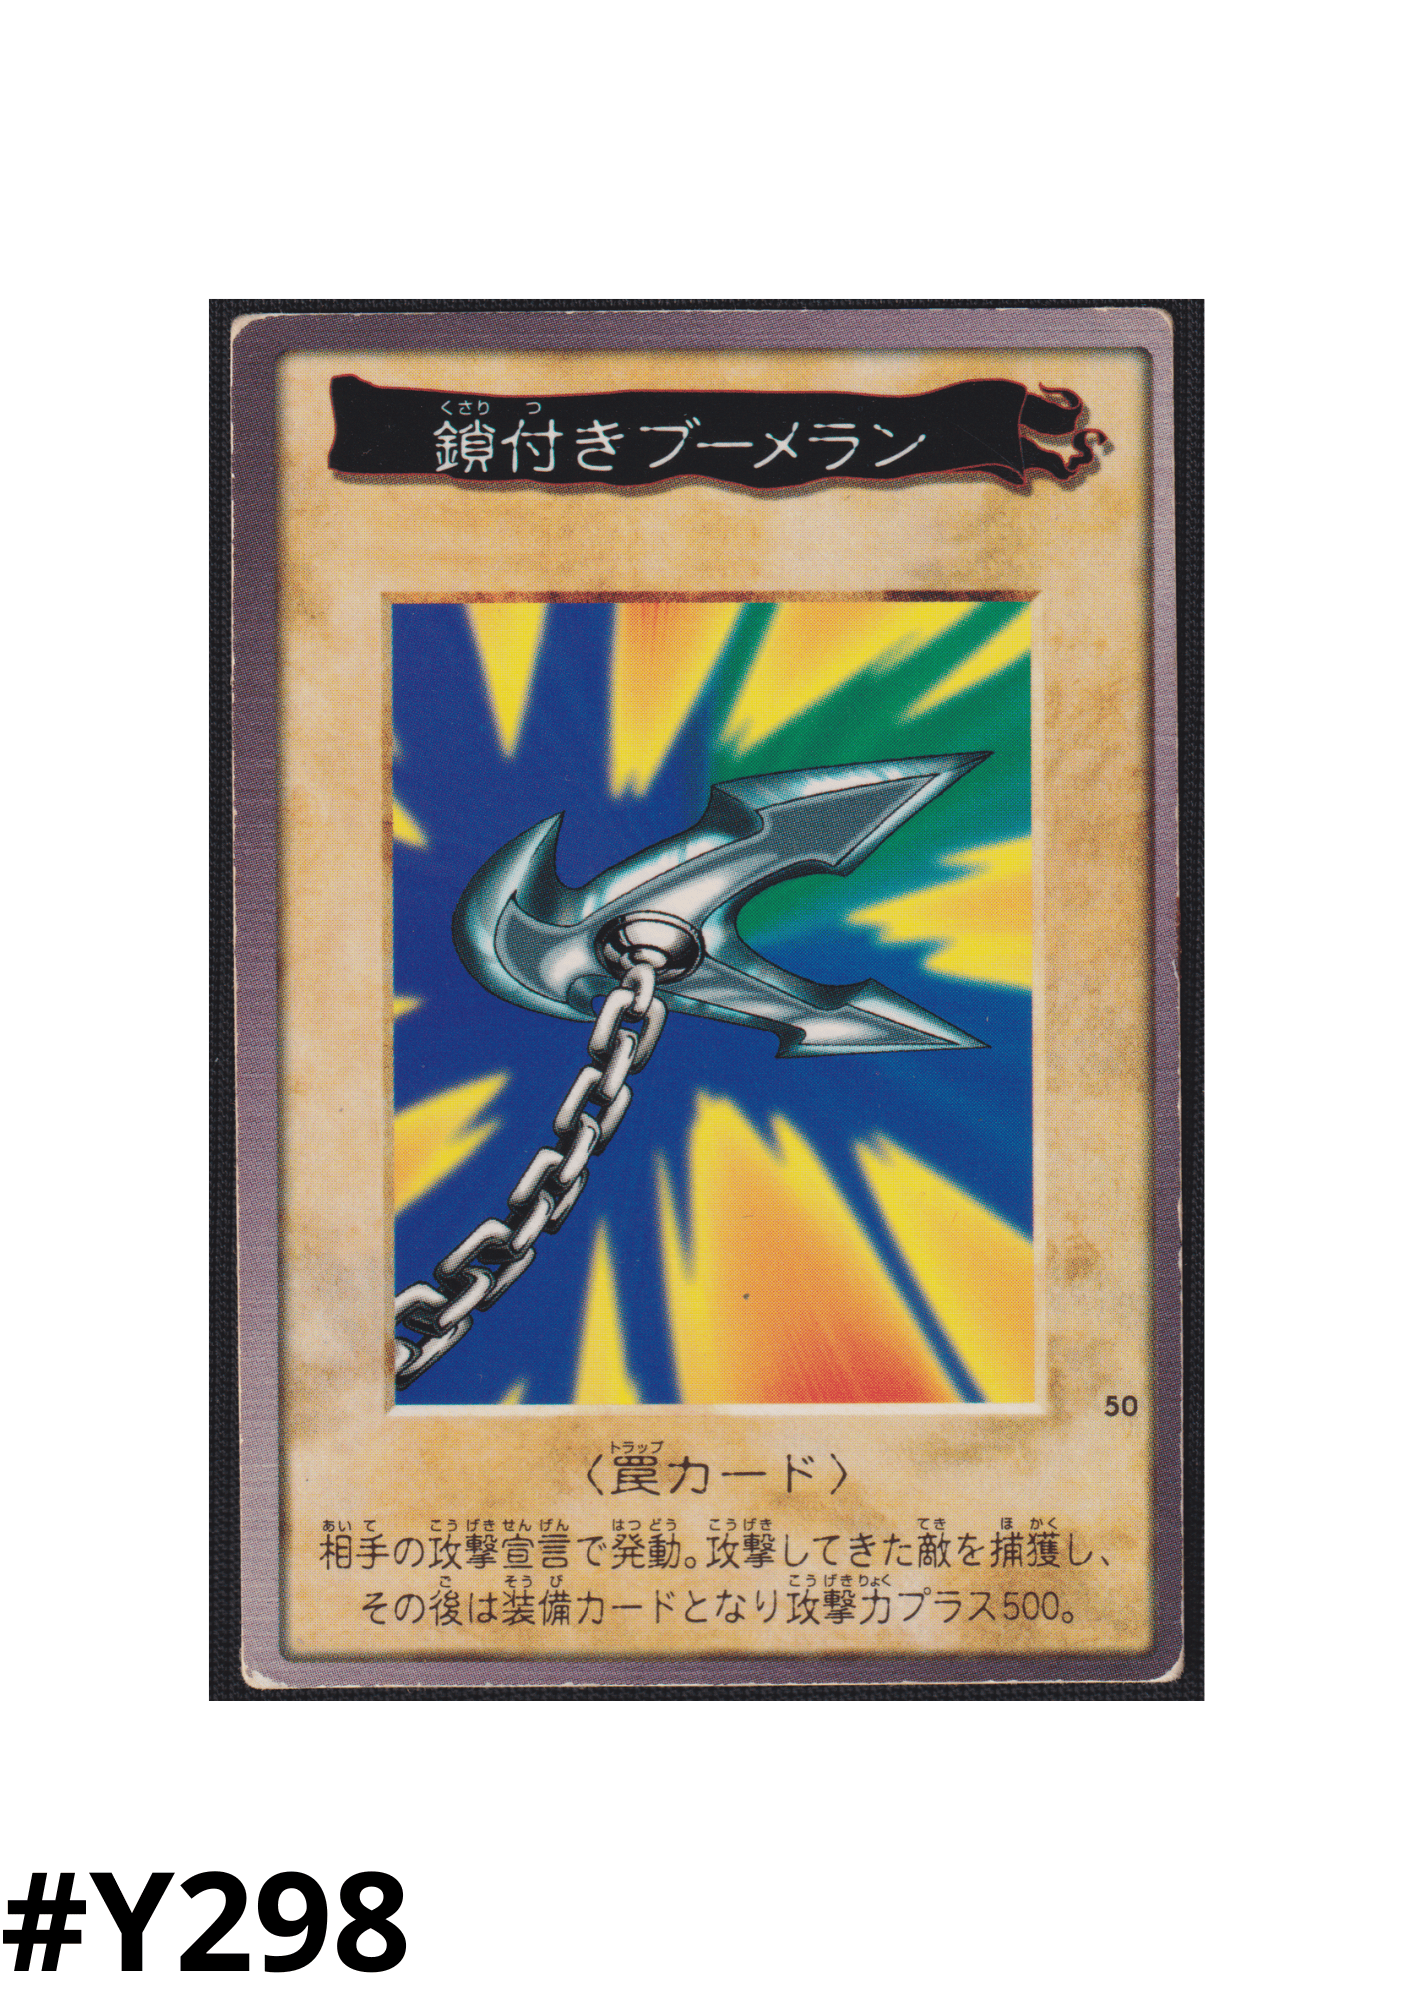 Yu-Gi-Oh! | Bandai Card No.50 | Kunai with Chain ChitoroShop